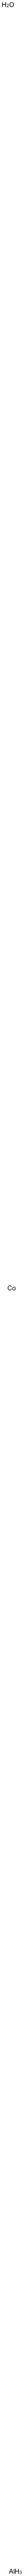 Aluminum cobalt oxide Structure